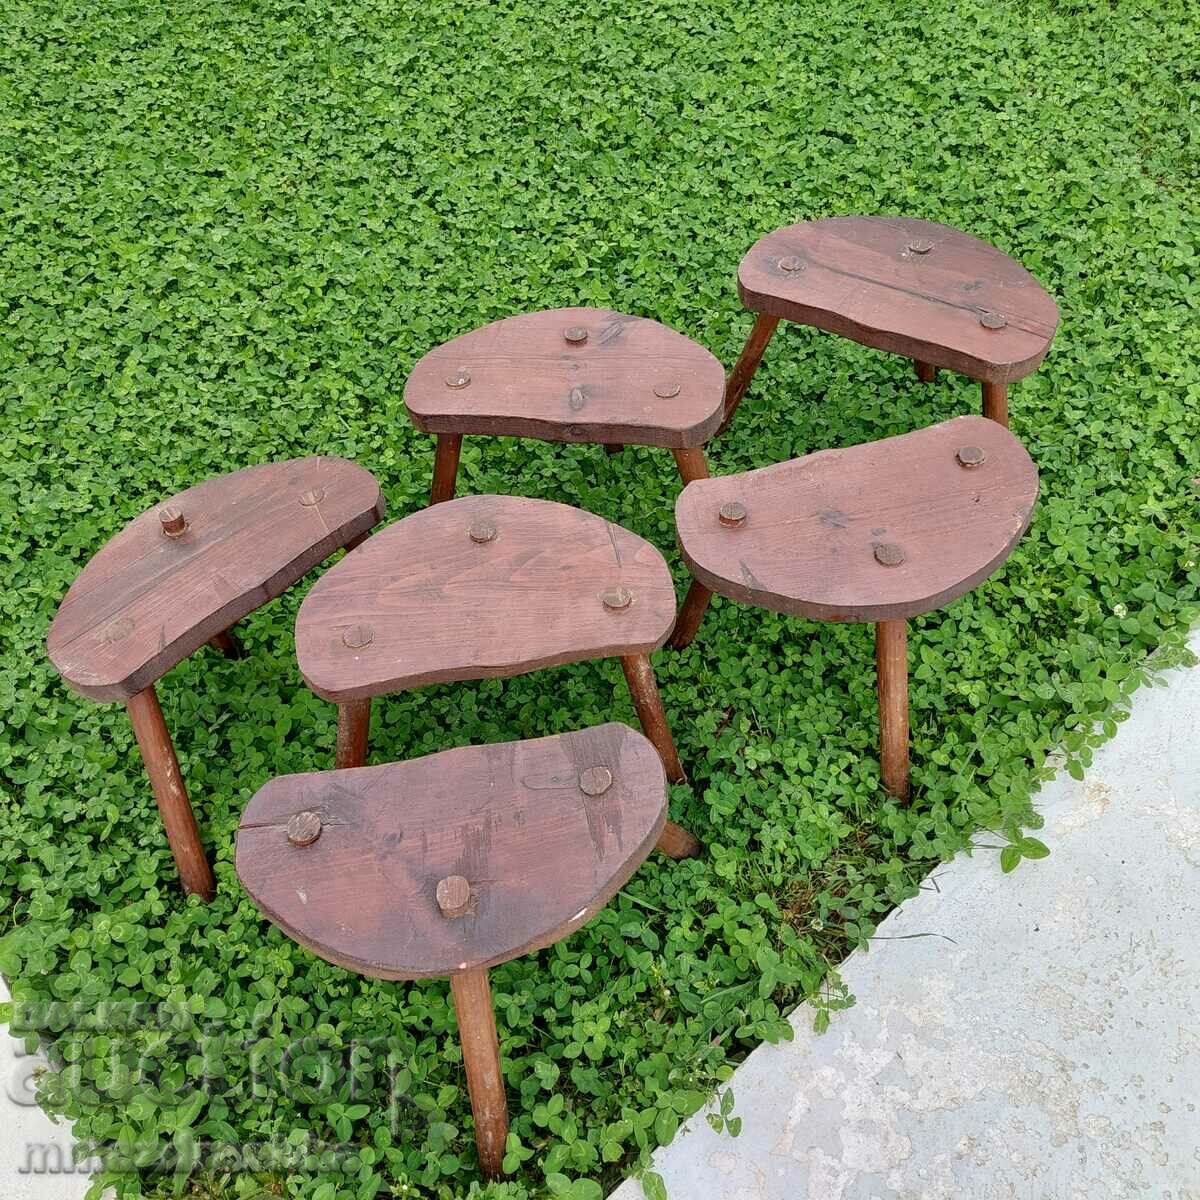 6 three-legged stools